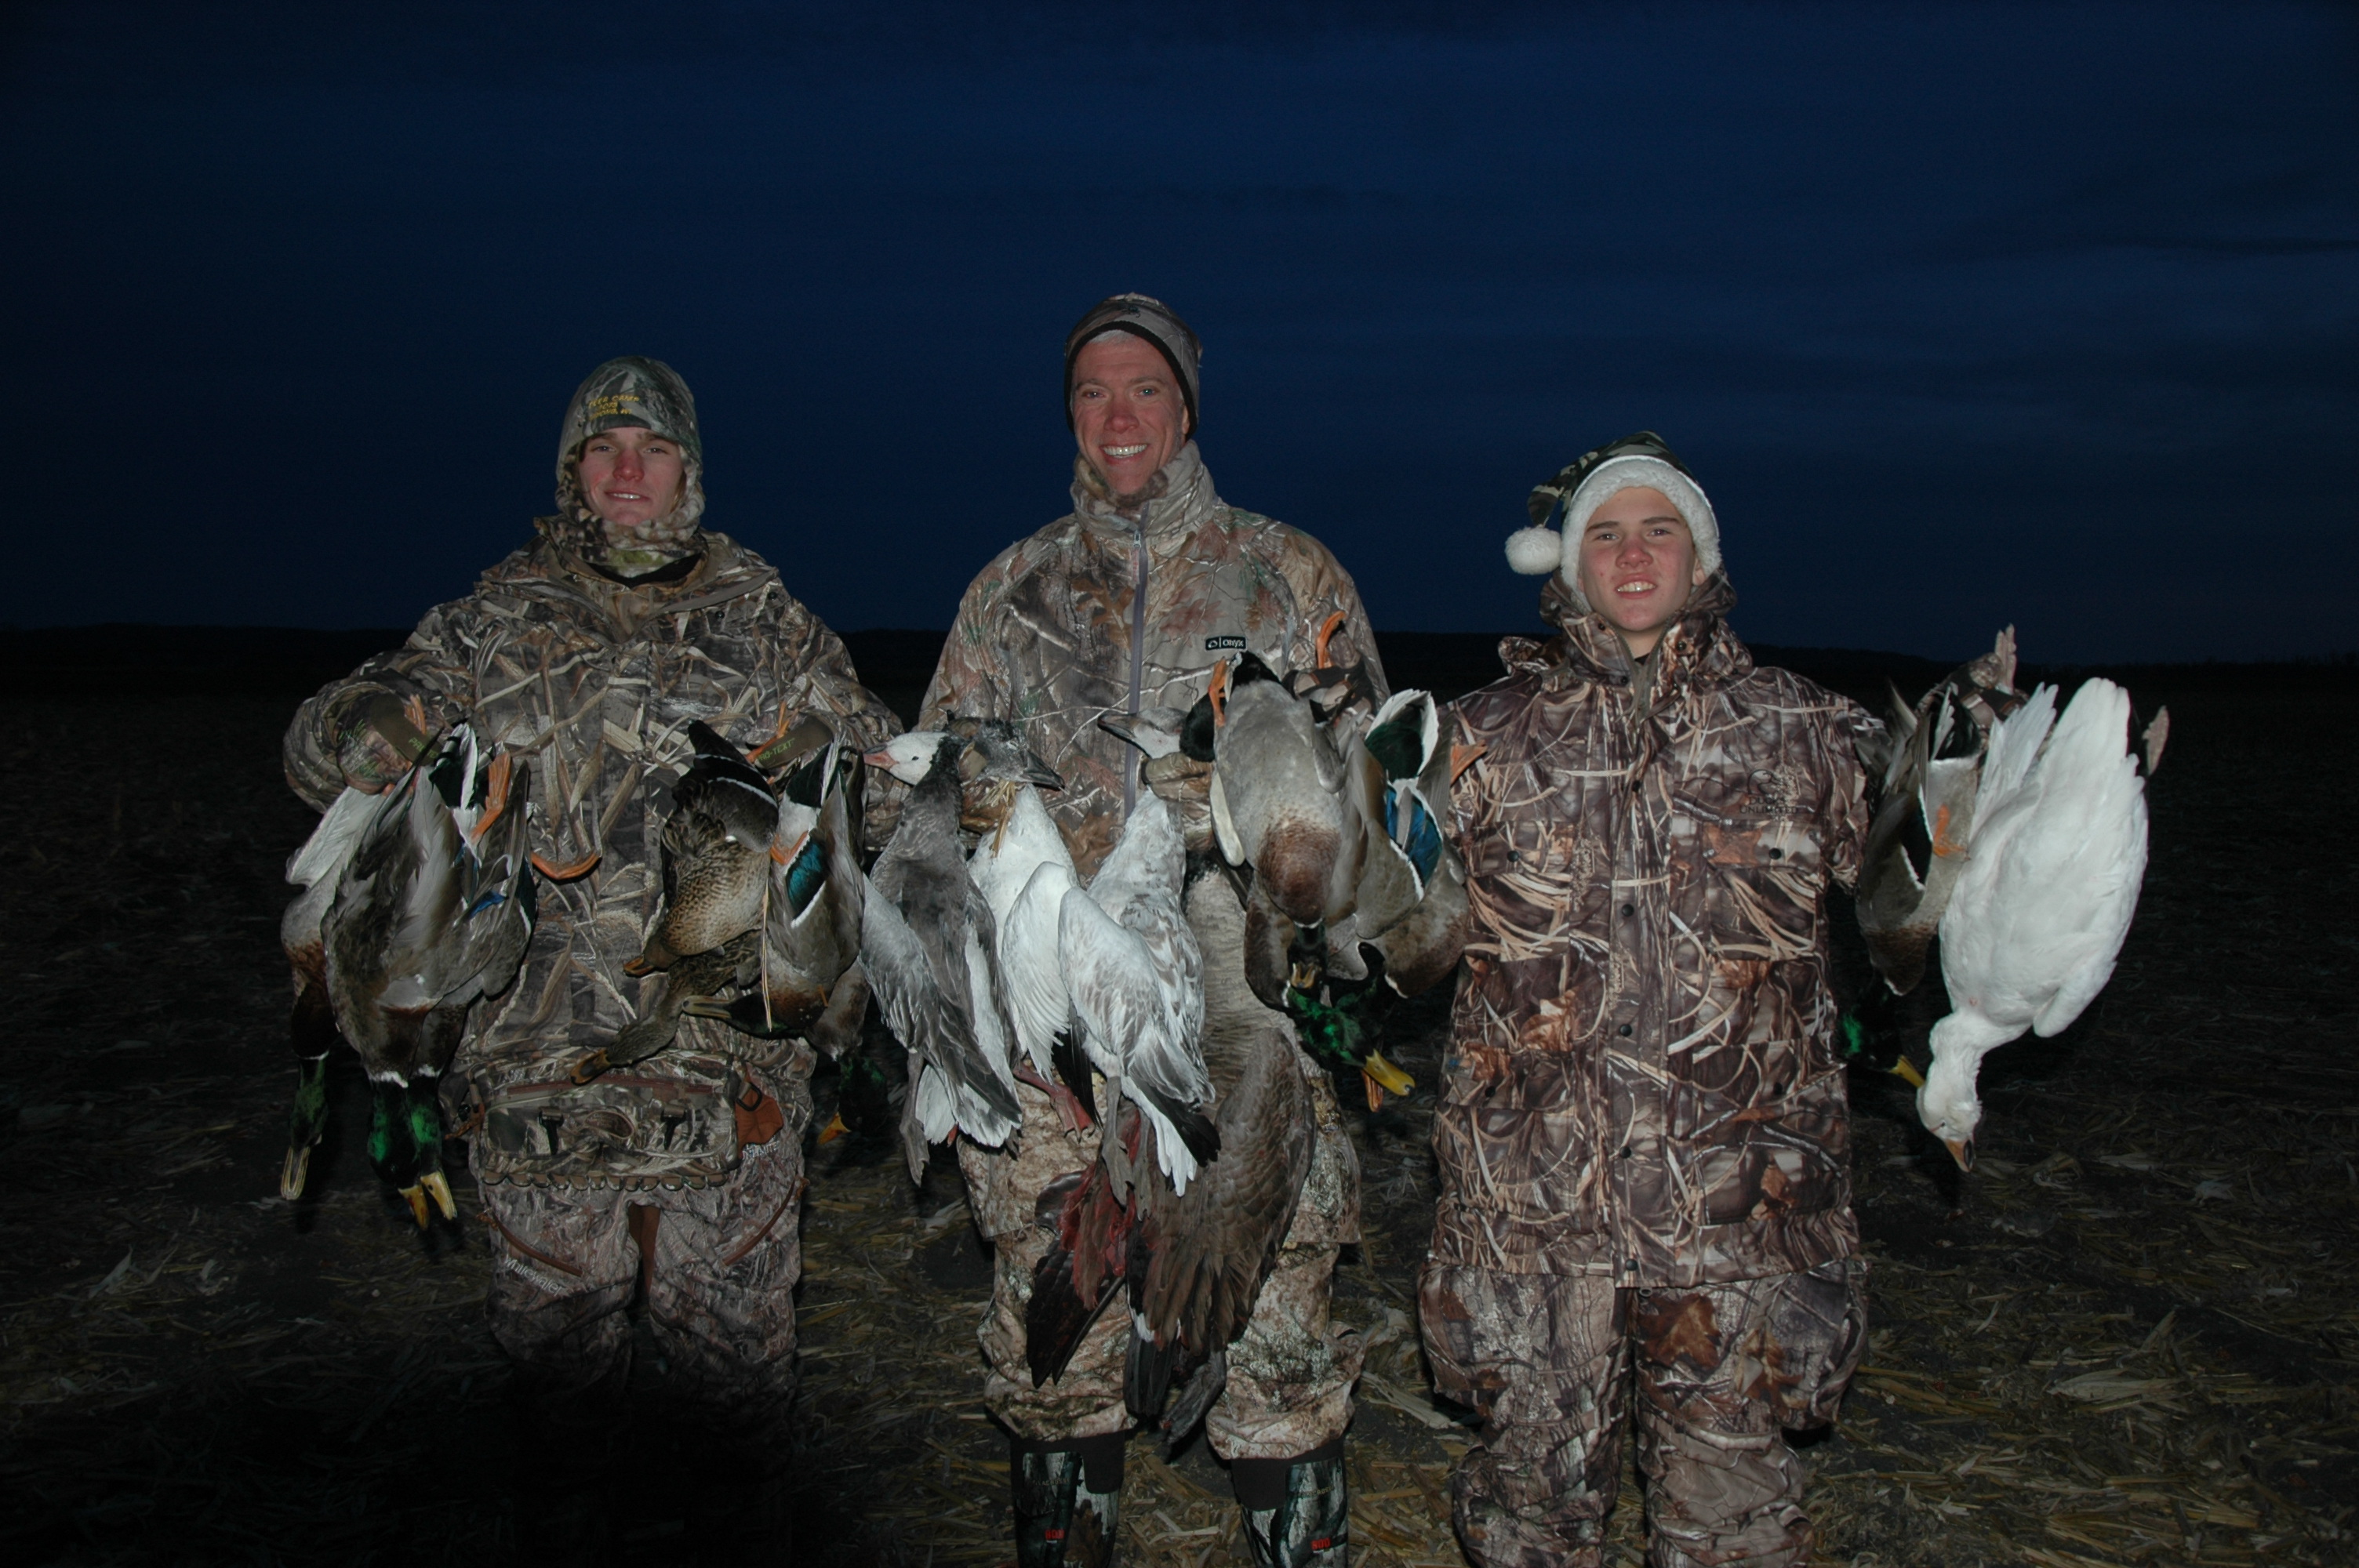 Squaw Creek Hunt Club - 855-473-2875 - Scott Croner - Guided Duck Hunts - Mound City, Missouri